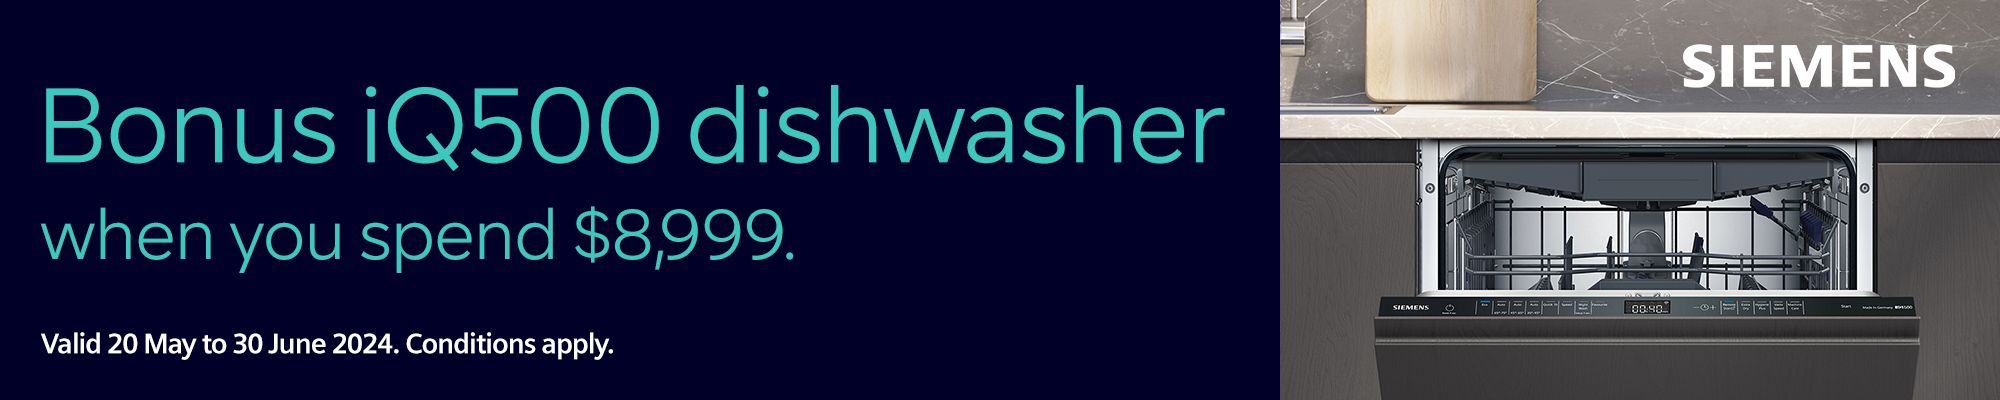 Receive A Bonus Siemens IQ500 Dishwasher* Valued At $1,999